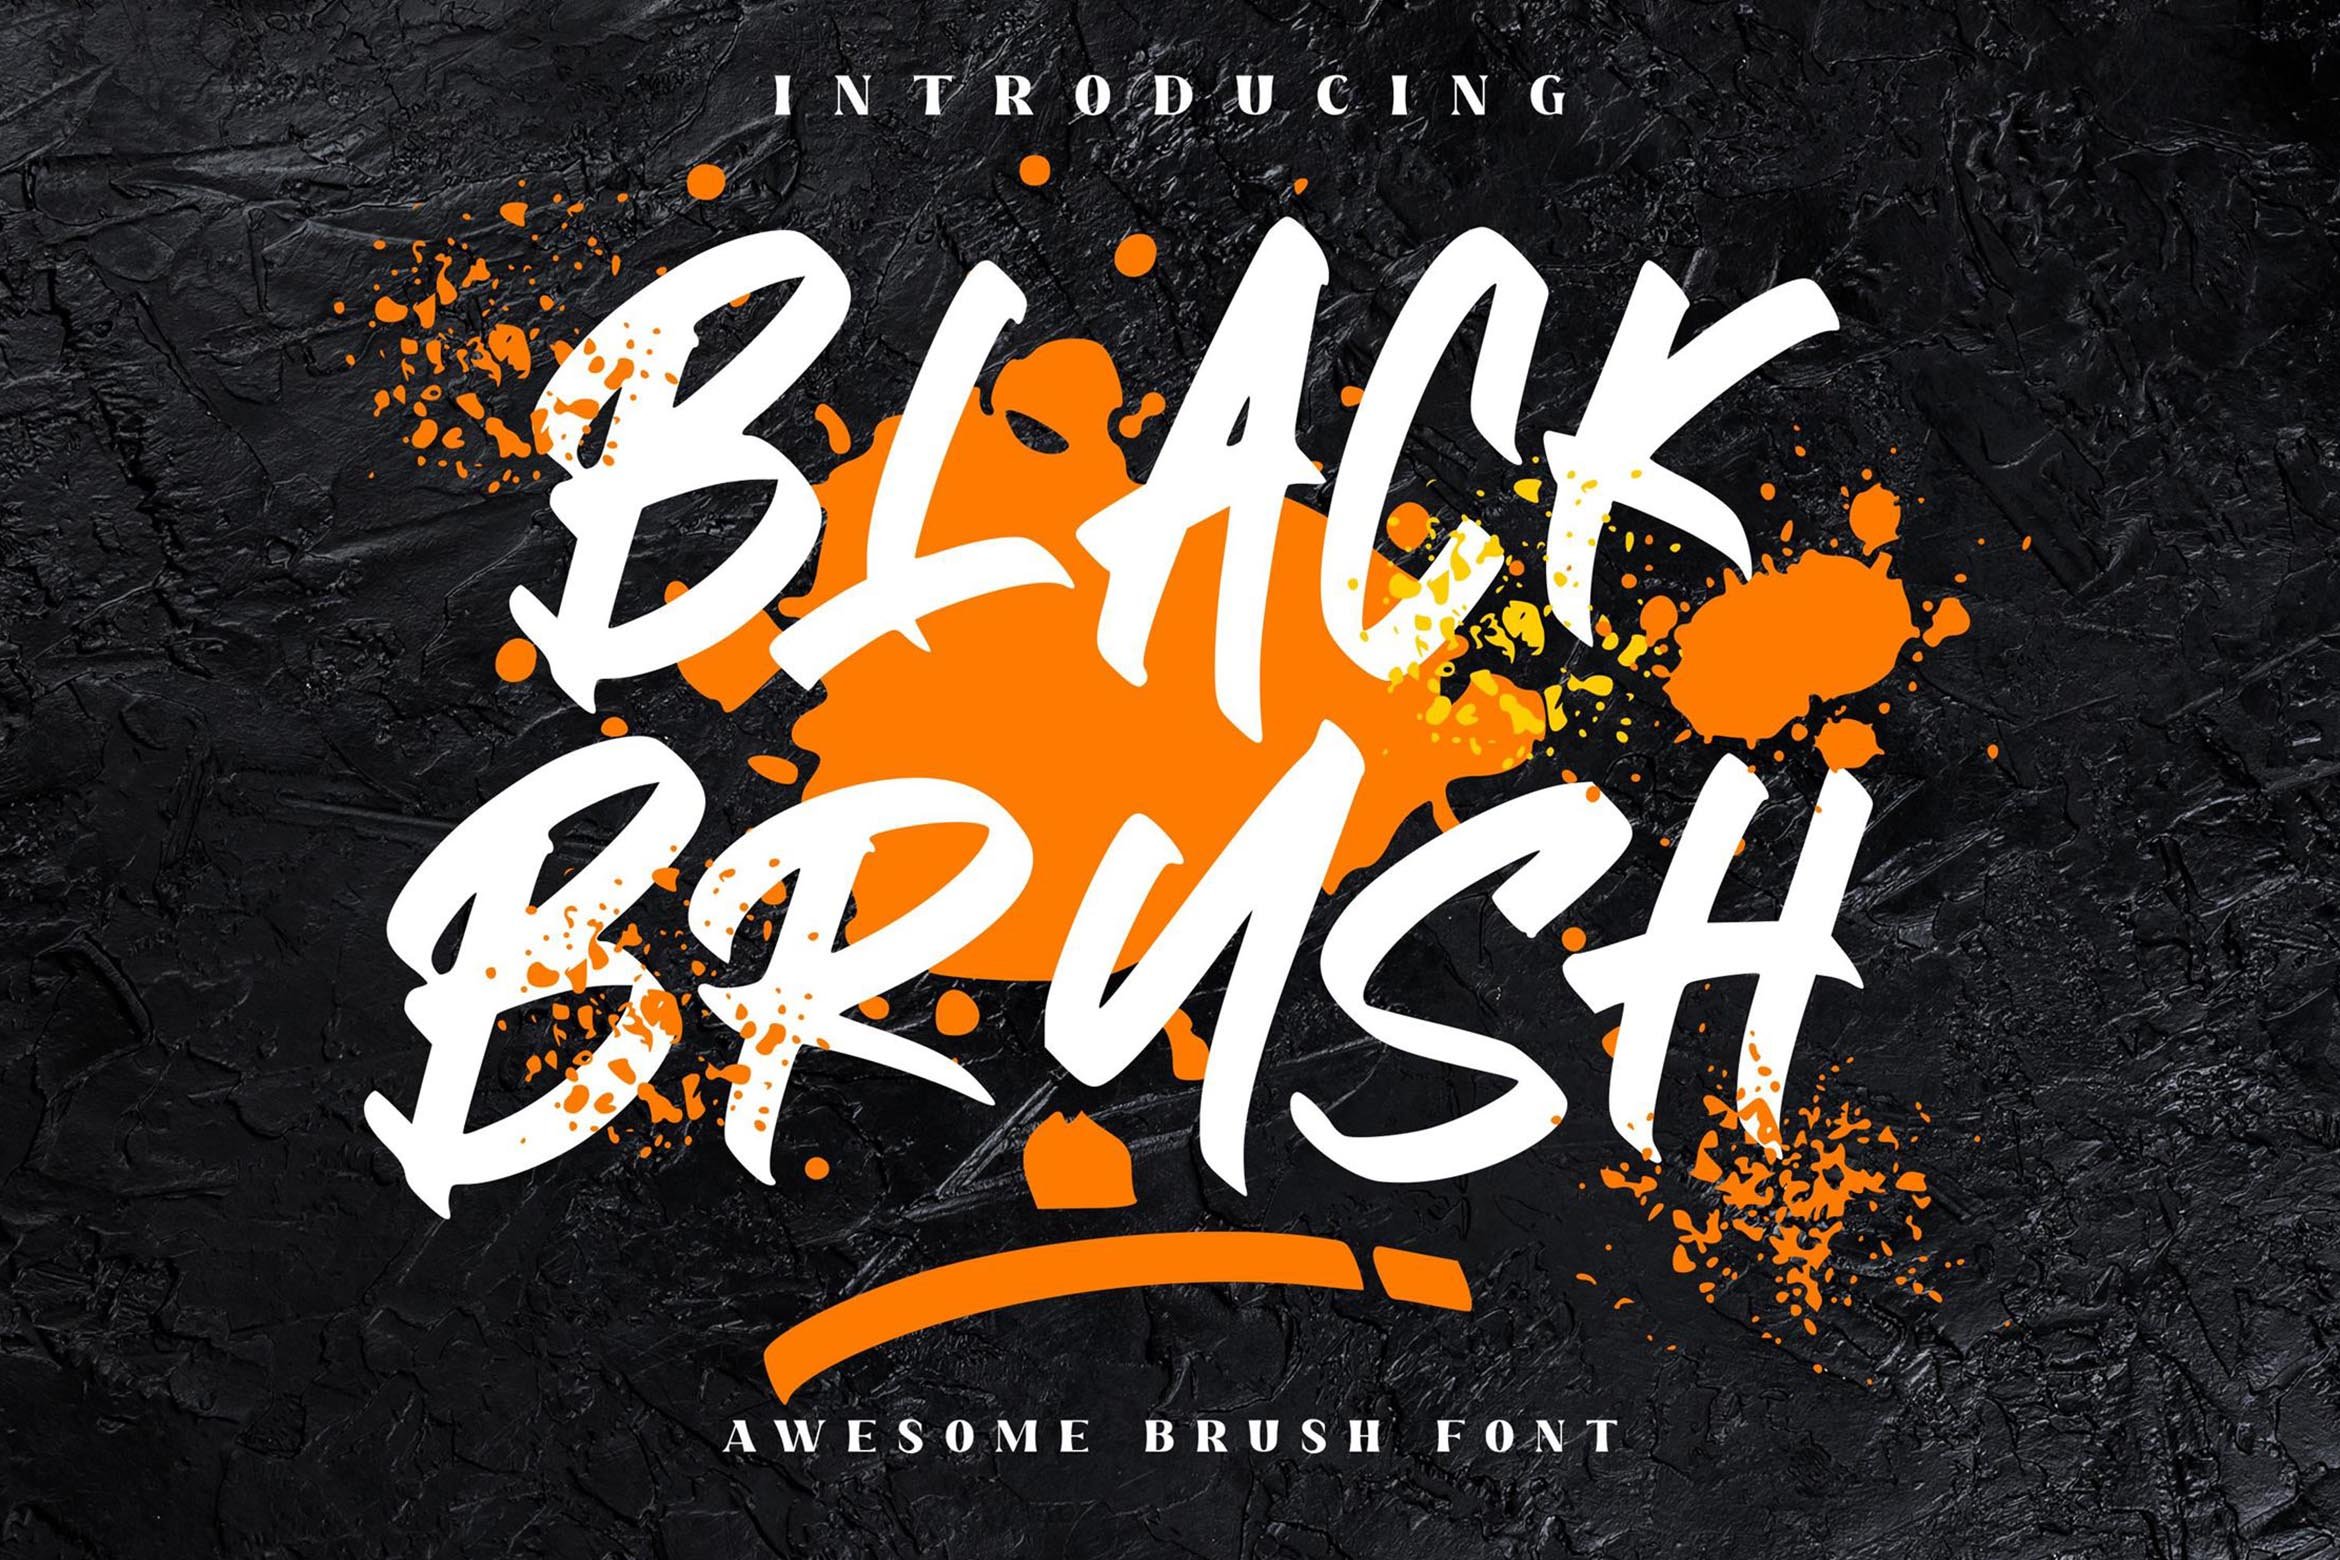 Black Brush Font LS cover image.